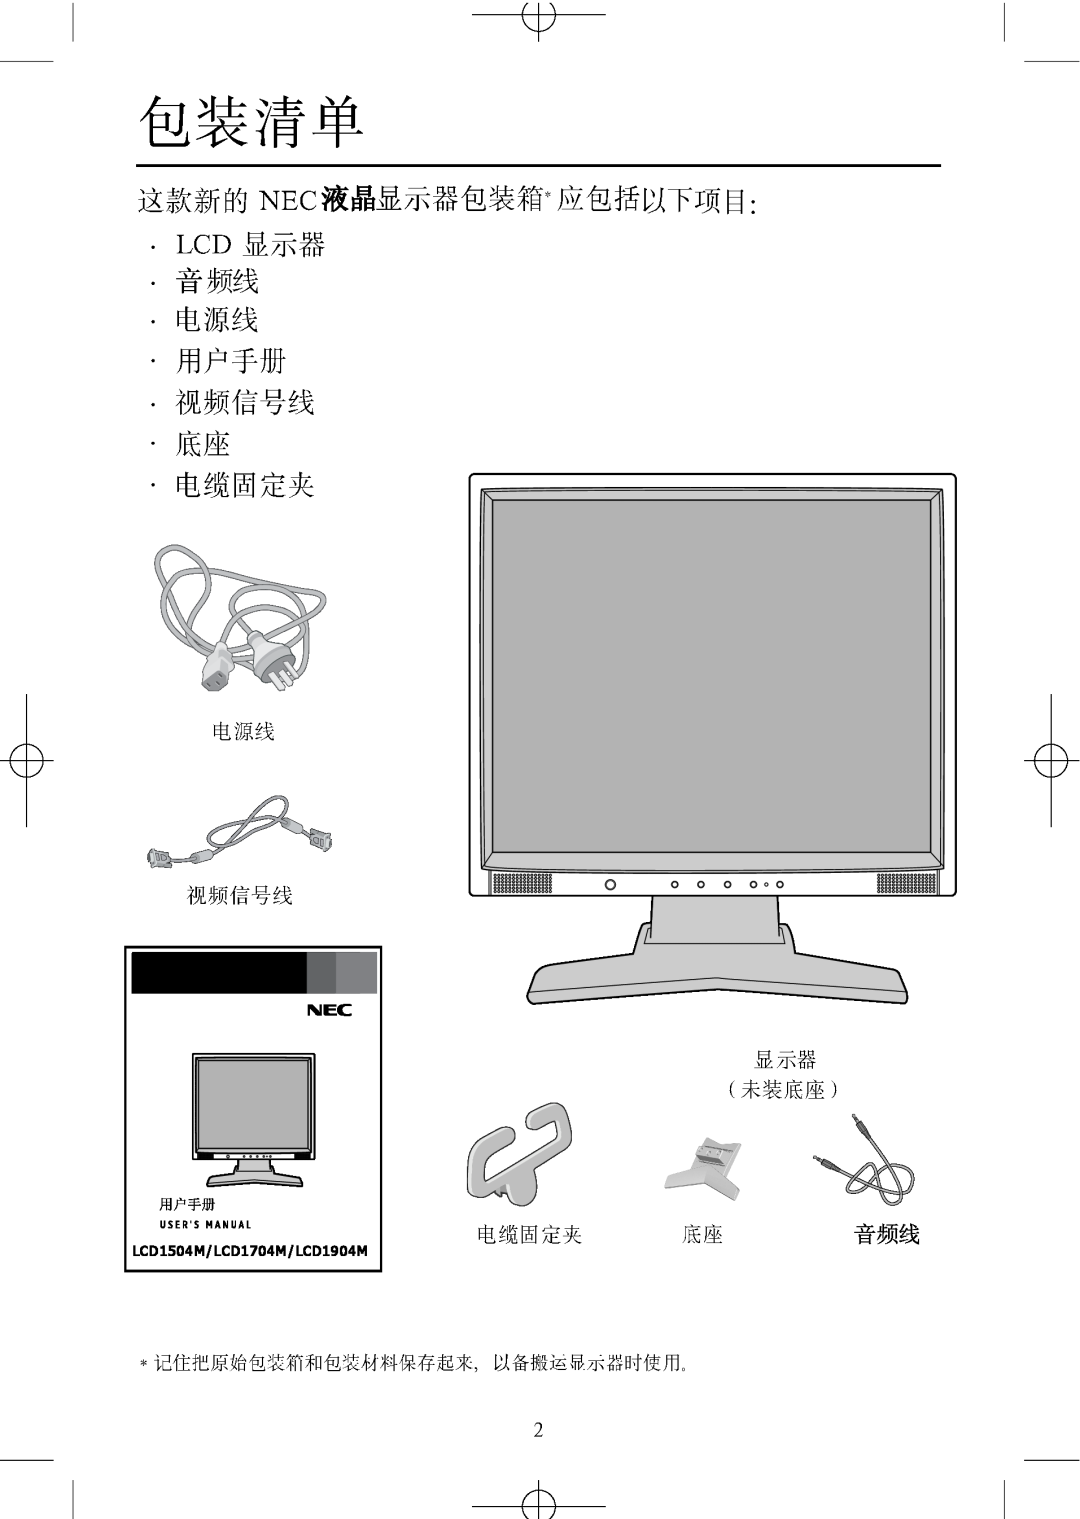 NEC manual LCD1504M/LCD1704M/LCD1904M 